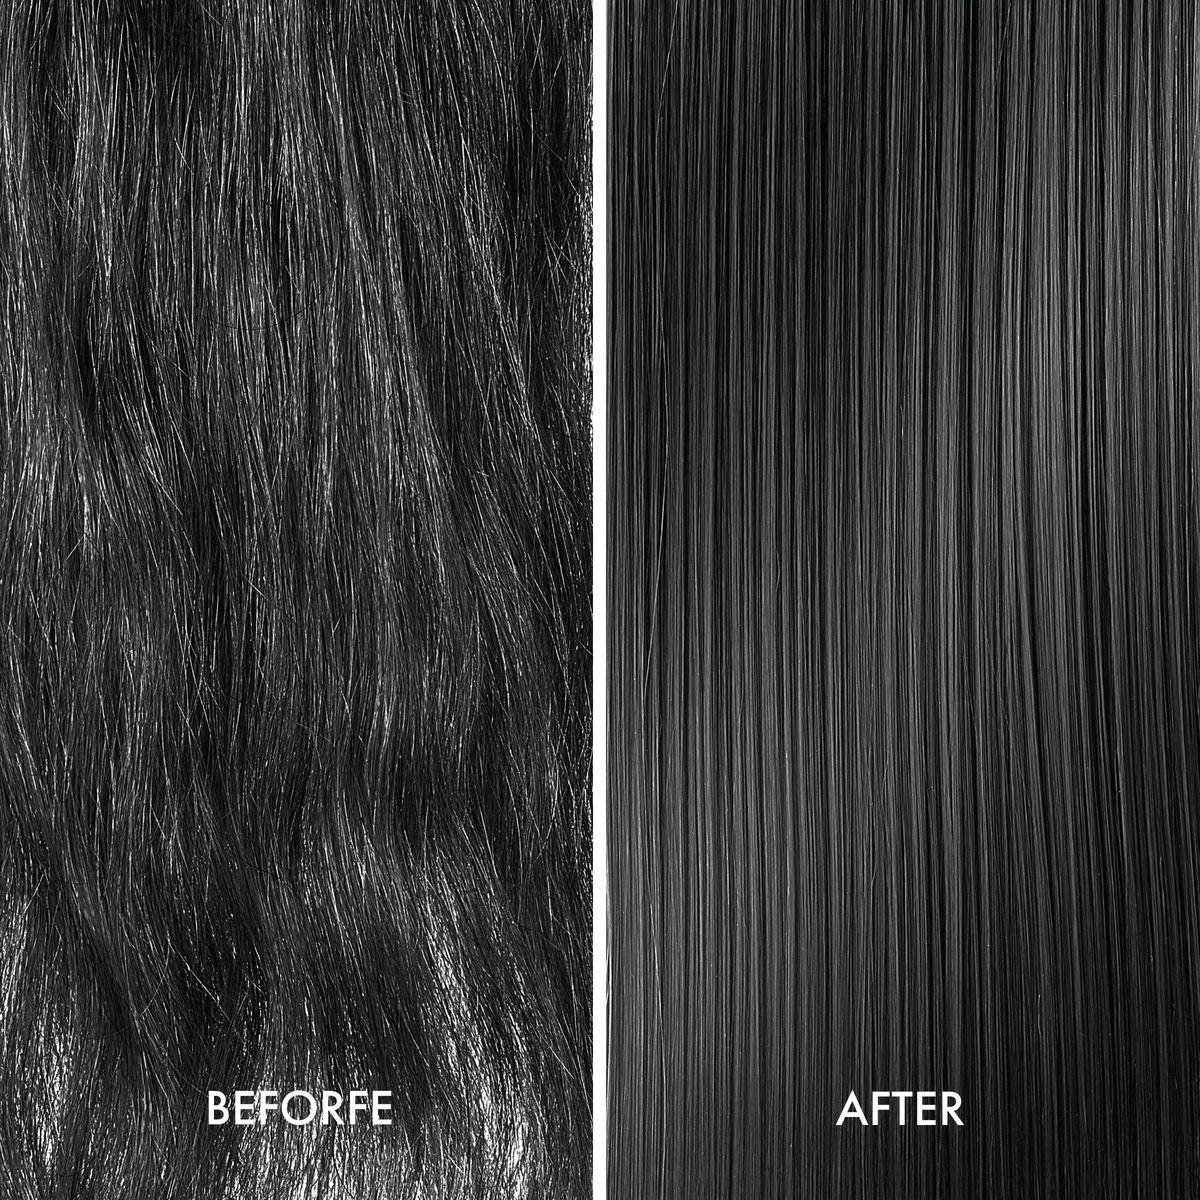 Anti Hair Loss Treatment / Roots